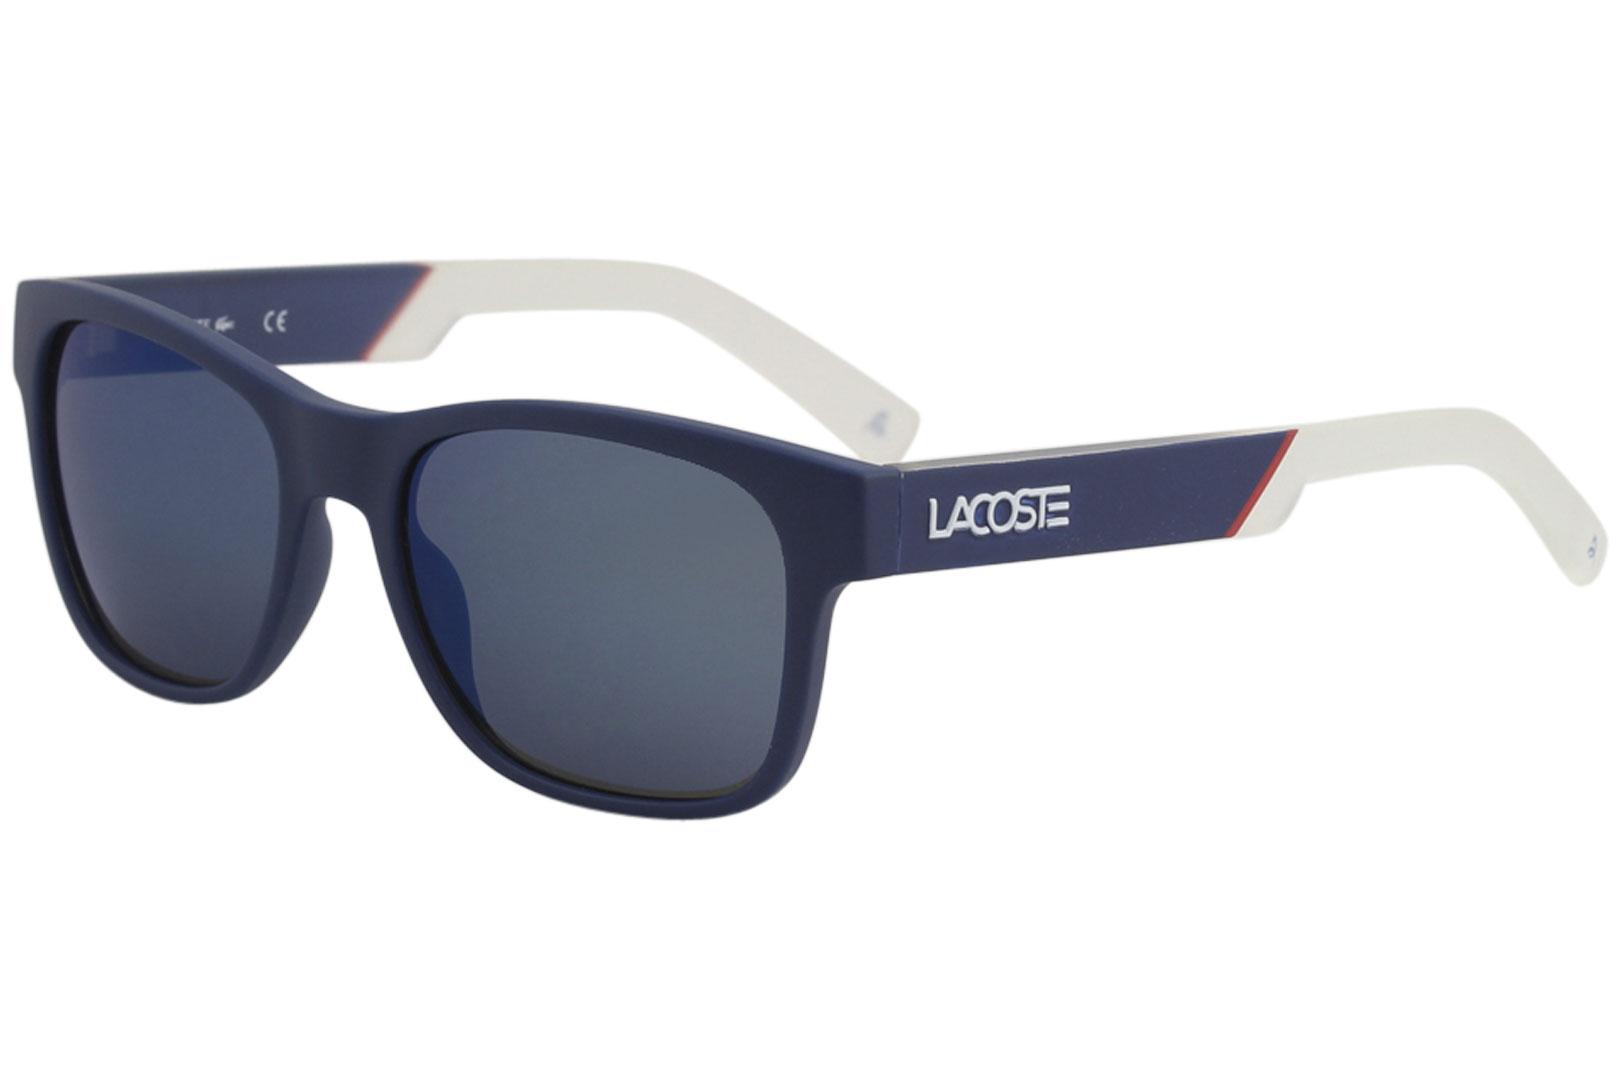 Lacoste Men's Novak Djokovich L829SND L/829/SND Fashion Square Sunglasses - Blue/Grey Blue Mirror   424 - Lens 54 Bridge 18 Temple 140mm